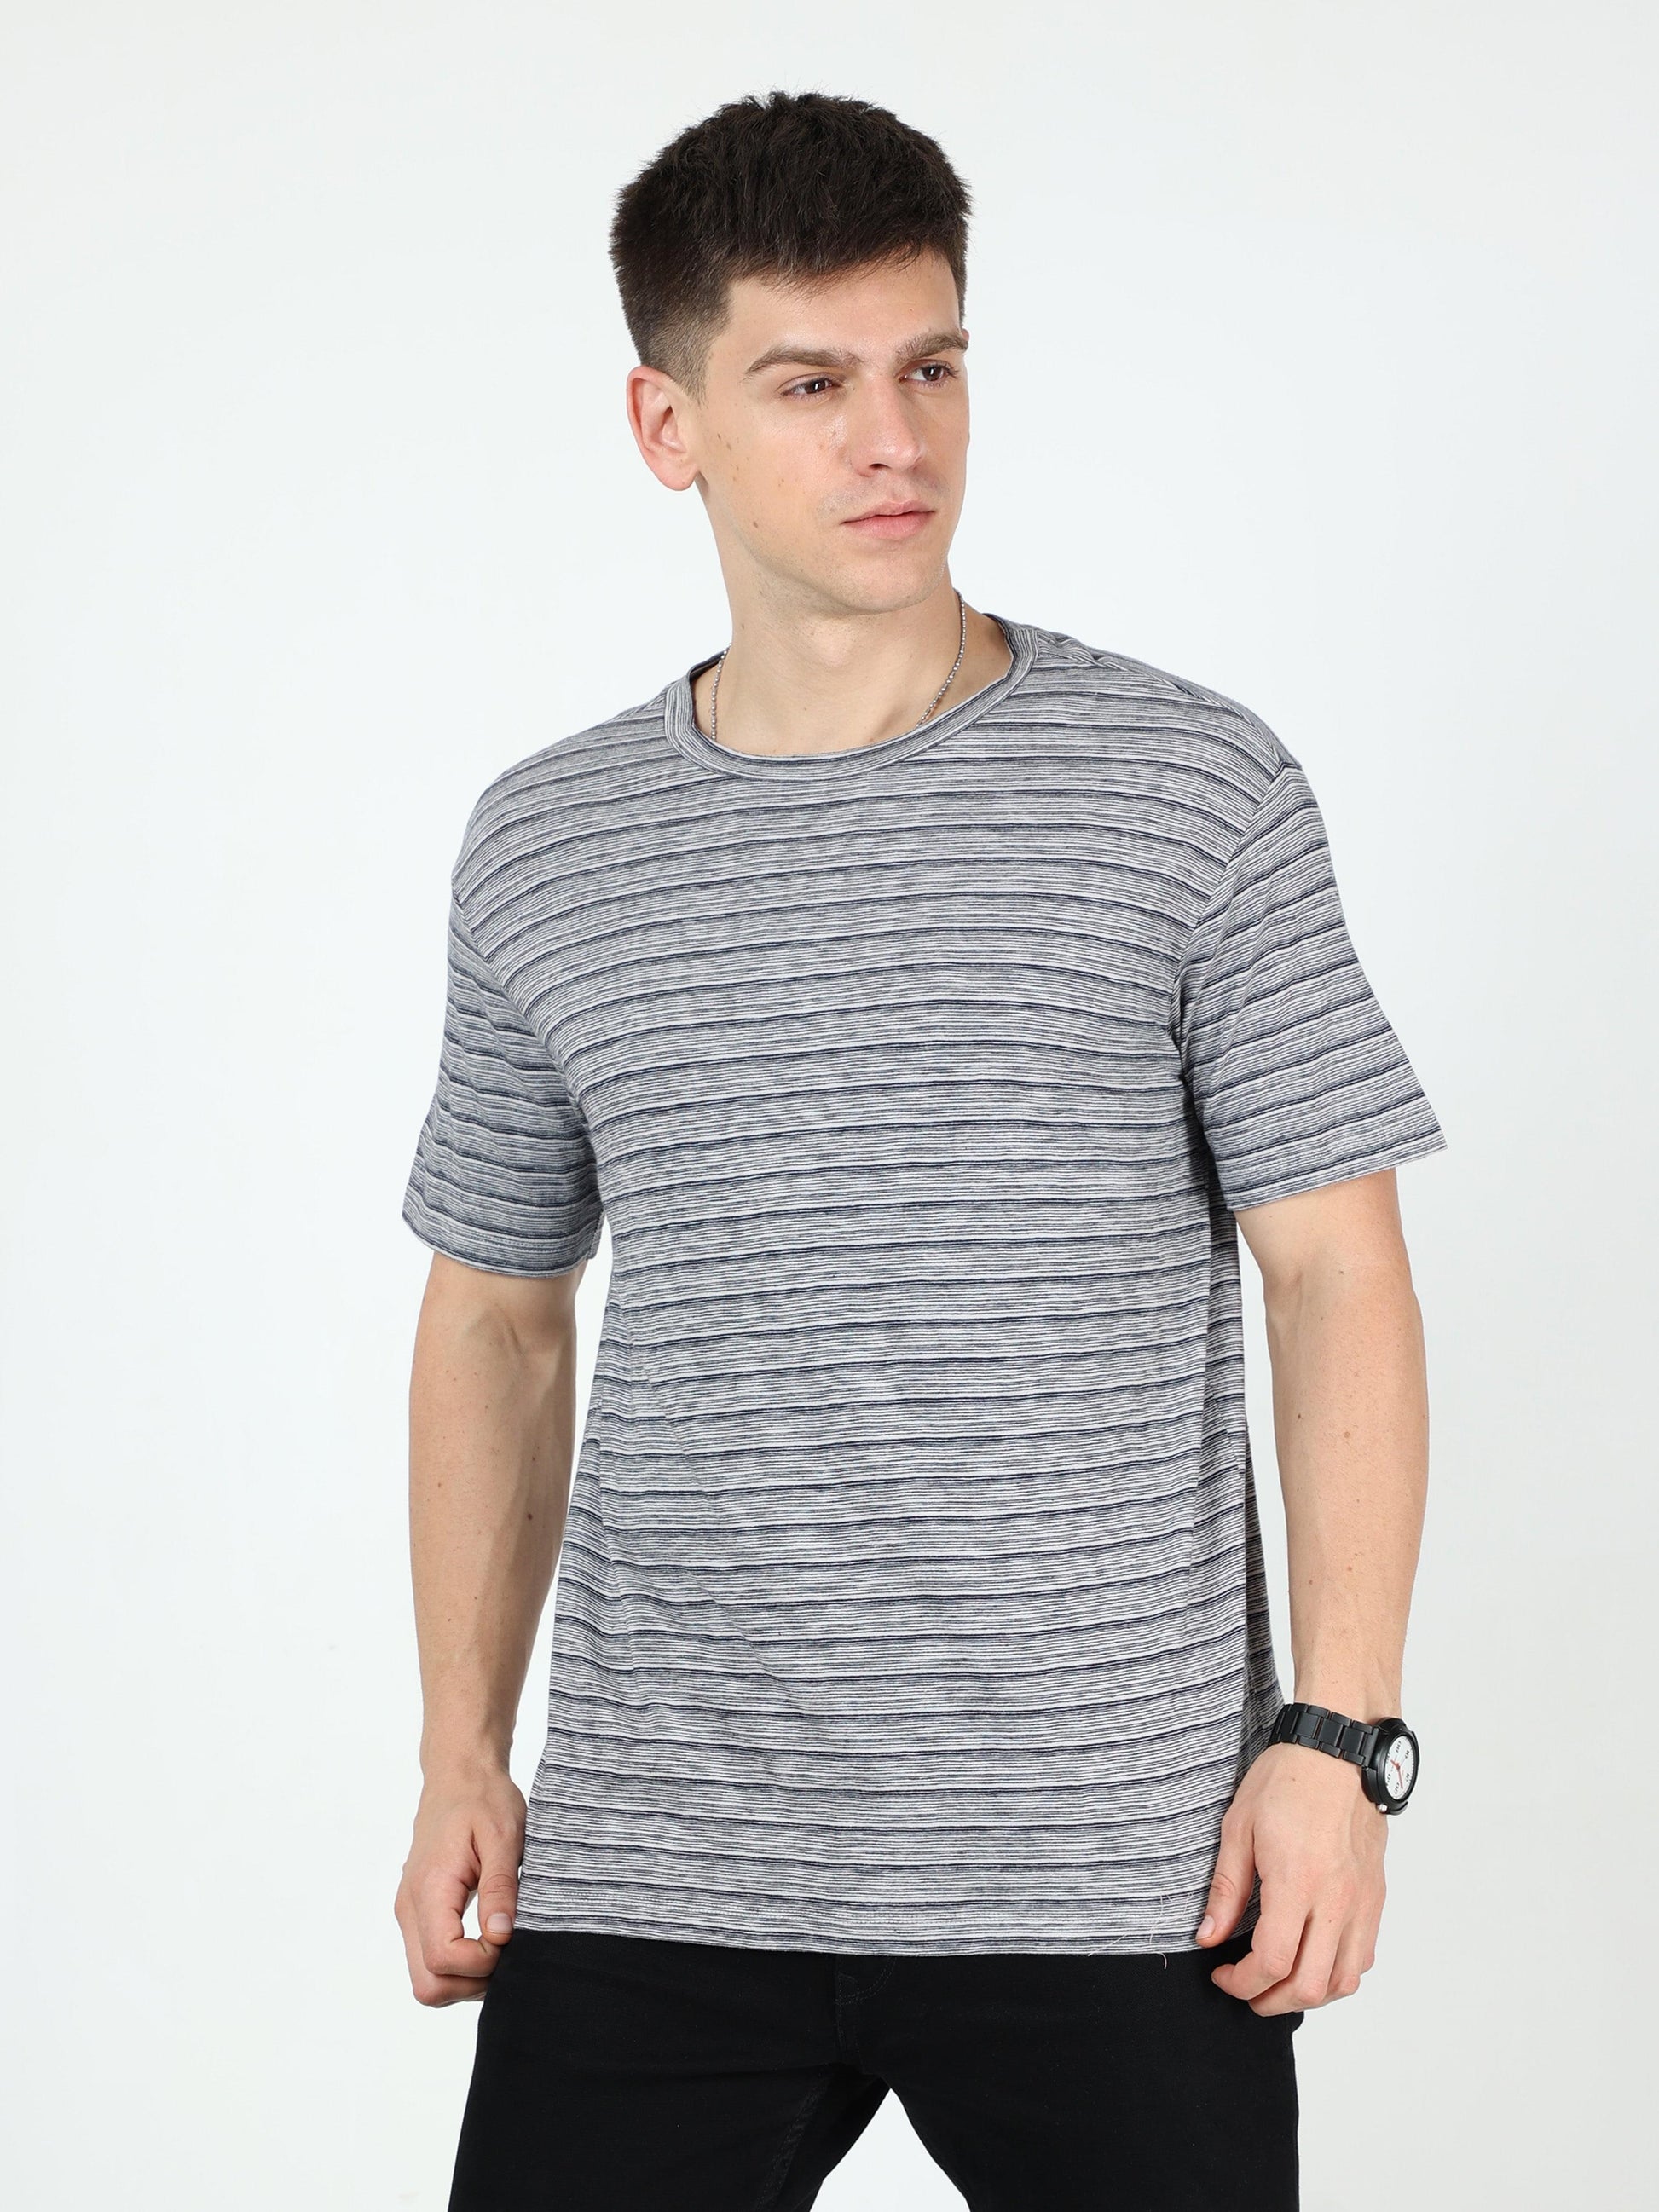 Men's casual T-Shirt - Yarn Dyed